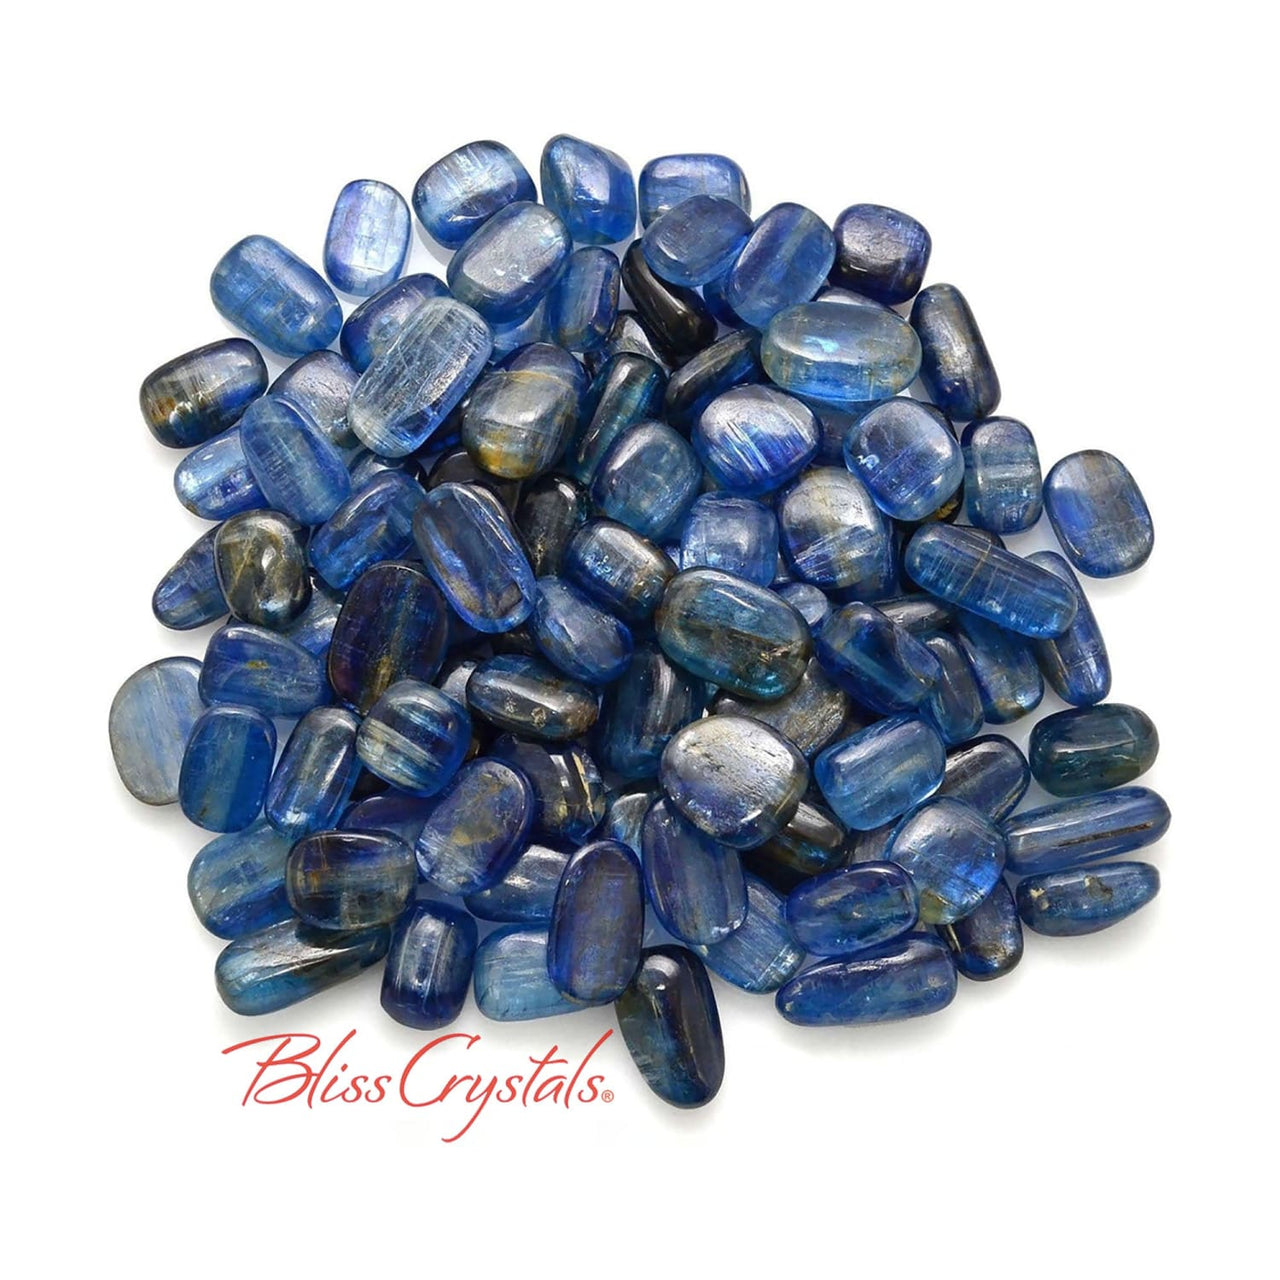 3 BLUE KYANITE XS Gemmy Polished Tumbled Stone Crystal #W2